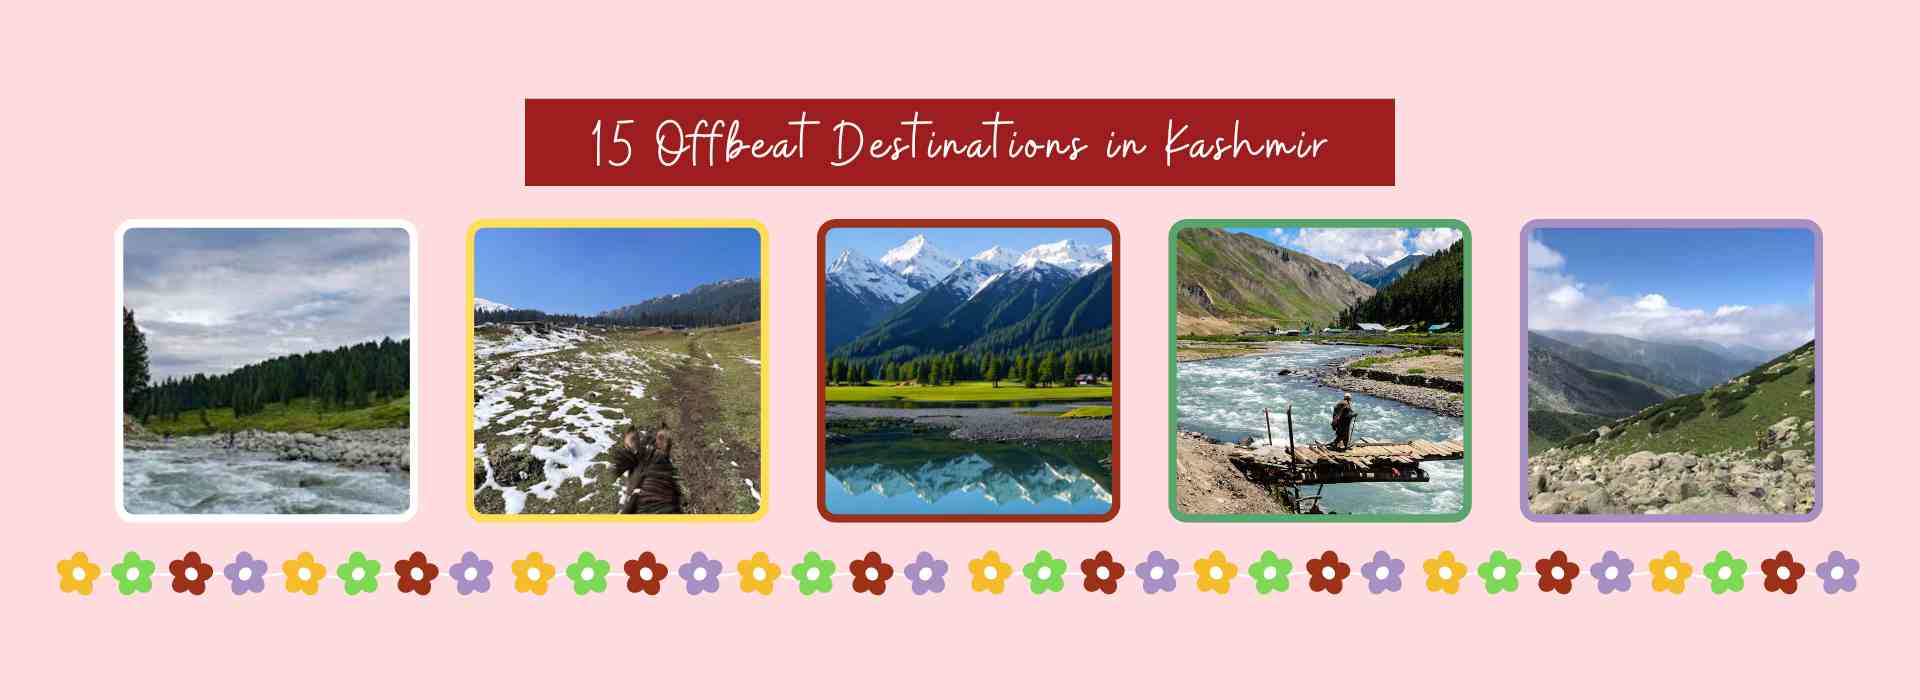 15 Offbeat Destinations in Kashmir